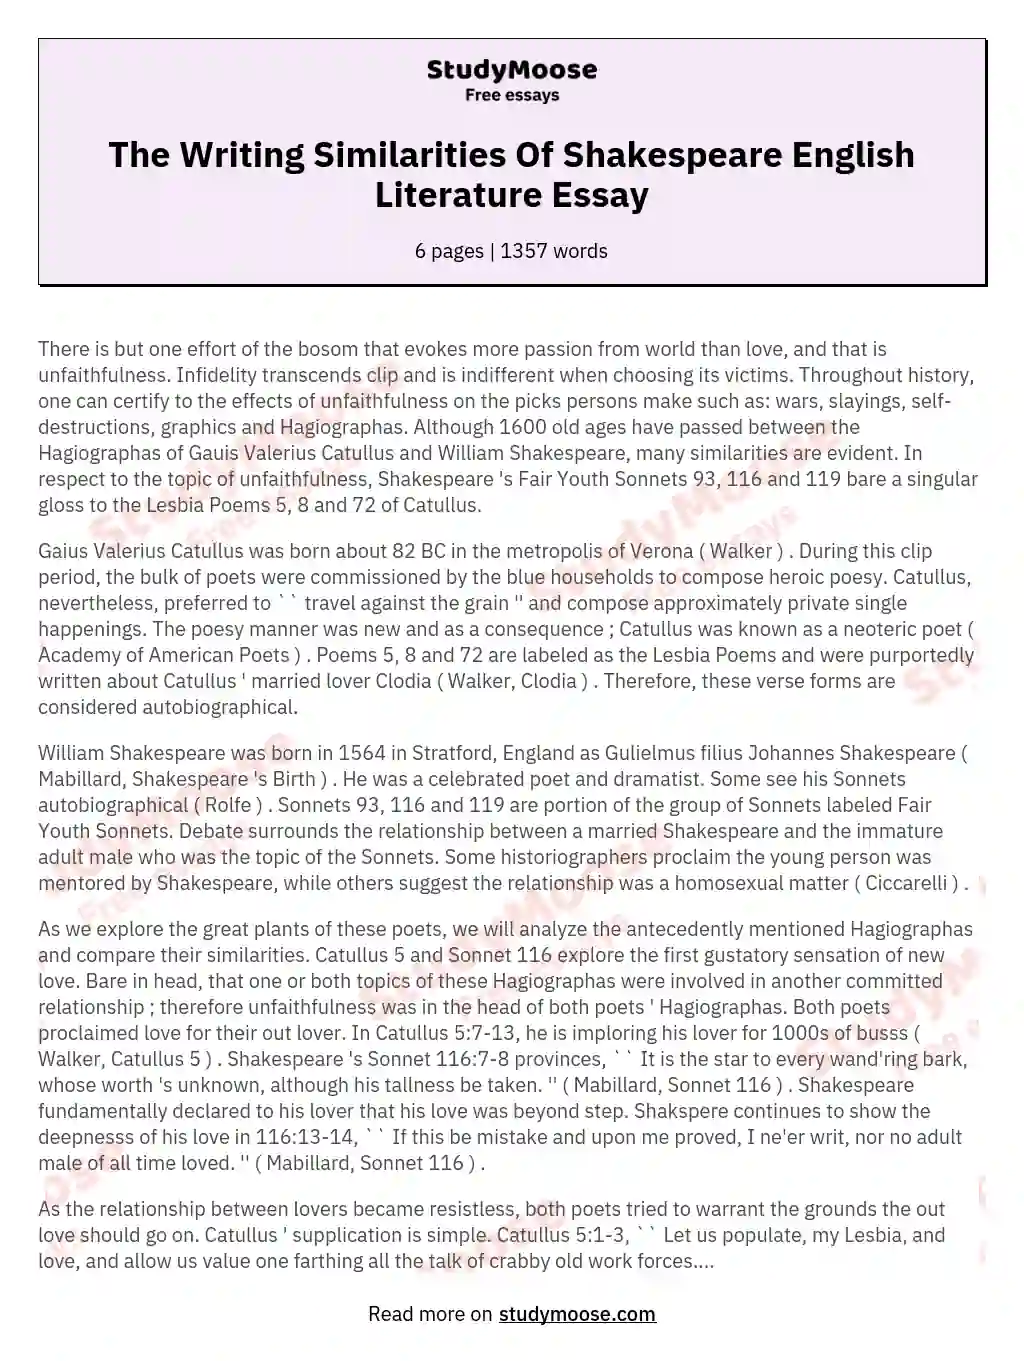 The Writing Similarities Of Shakespeare English Literature Essay essay